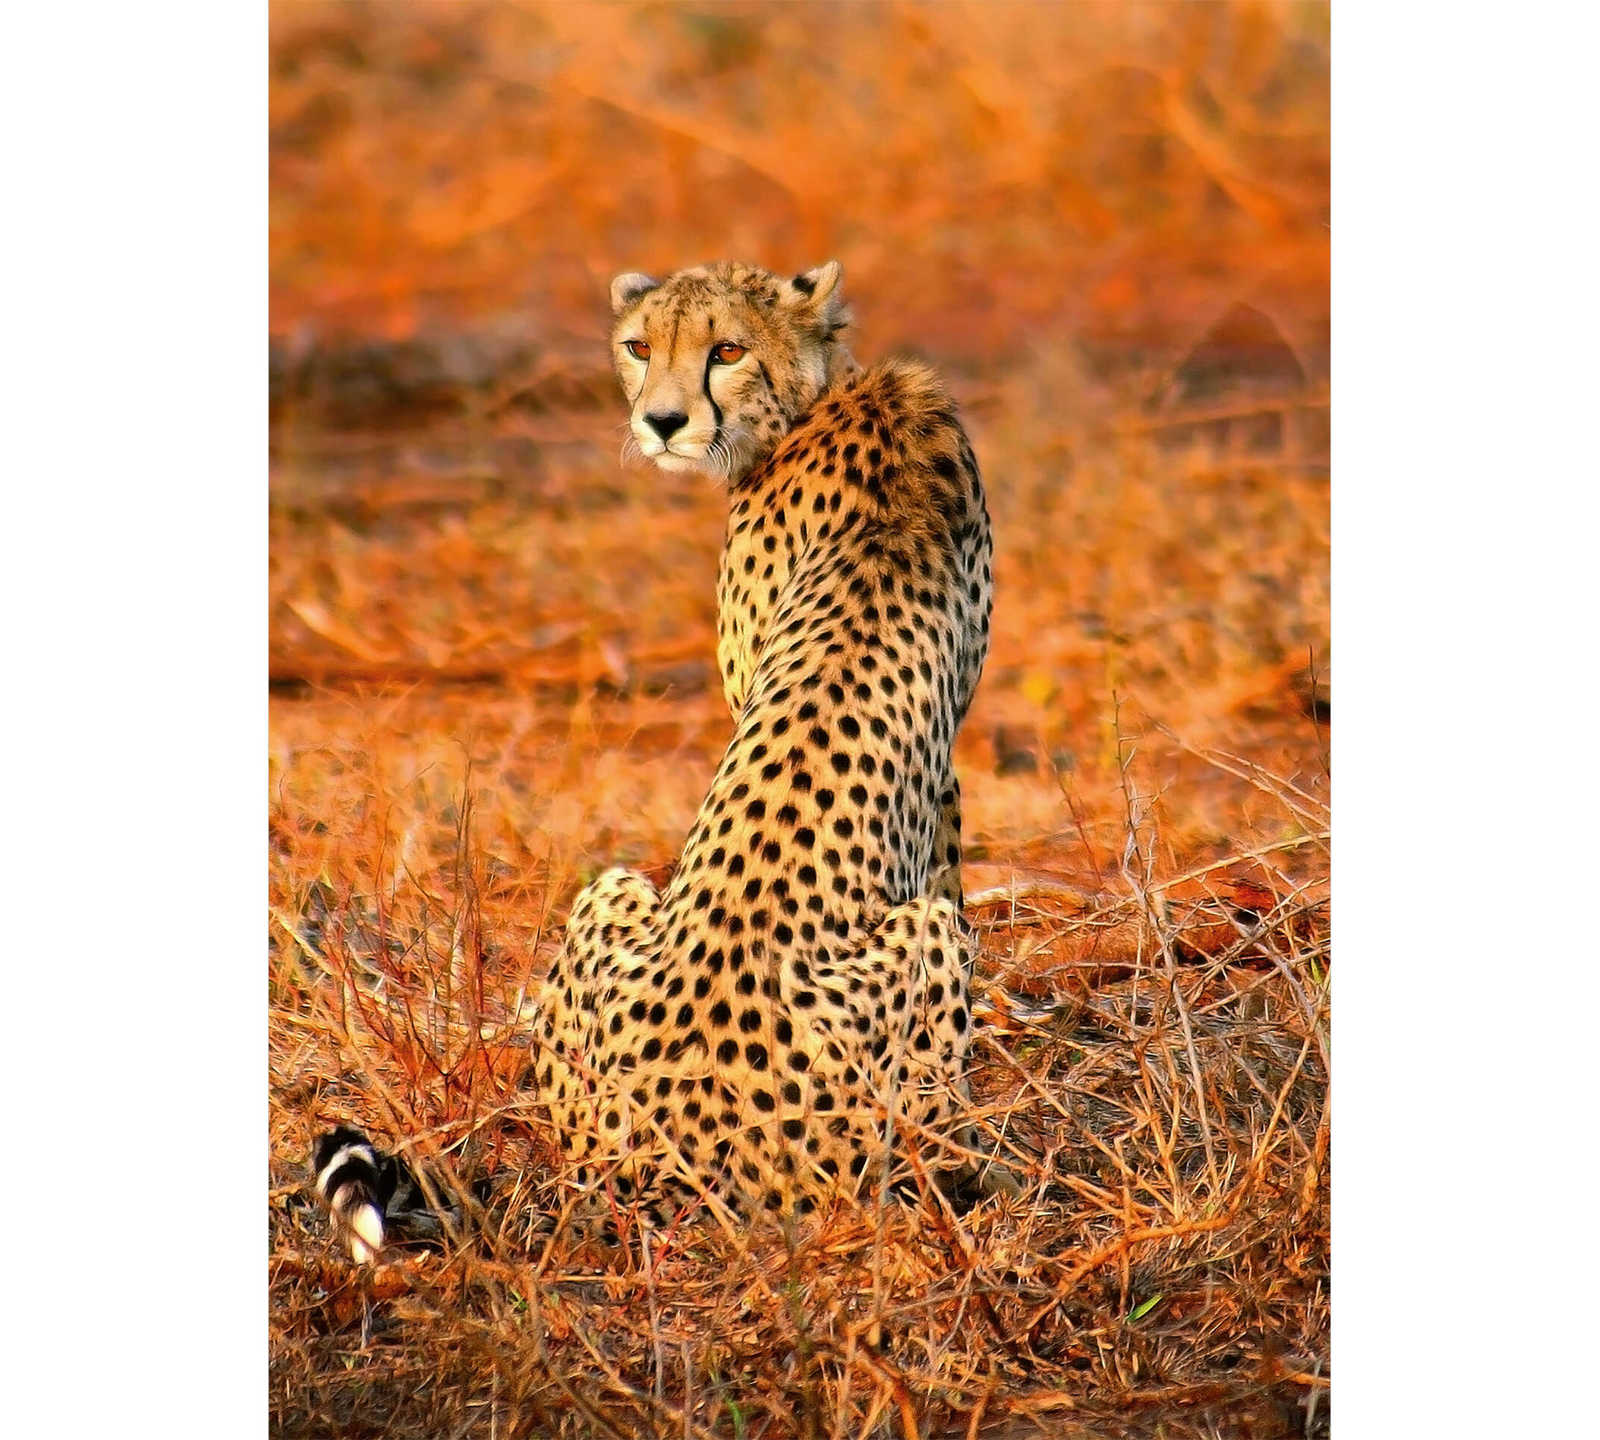             Safari Fototapete Tier Leopard – Gelb, Orange, Schwarz
        